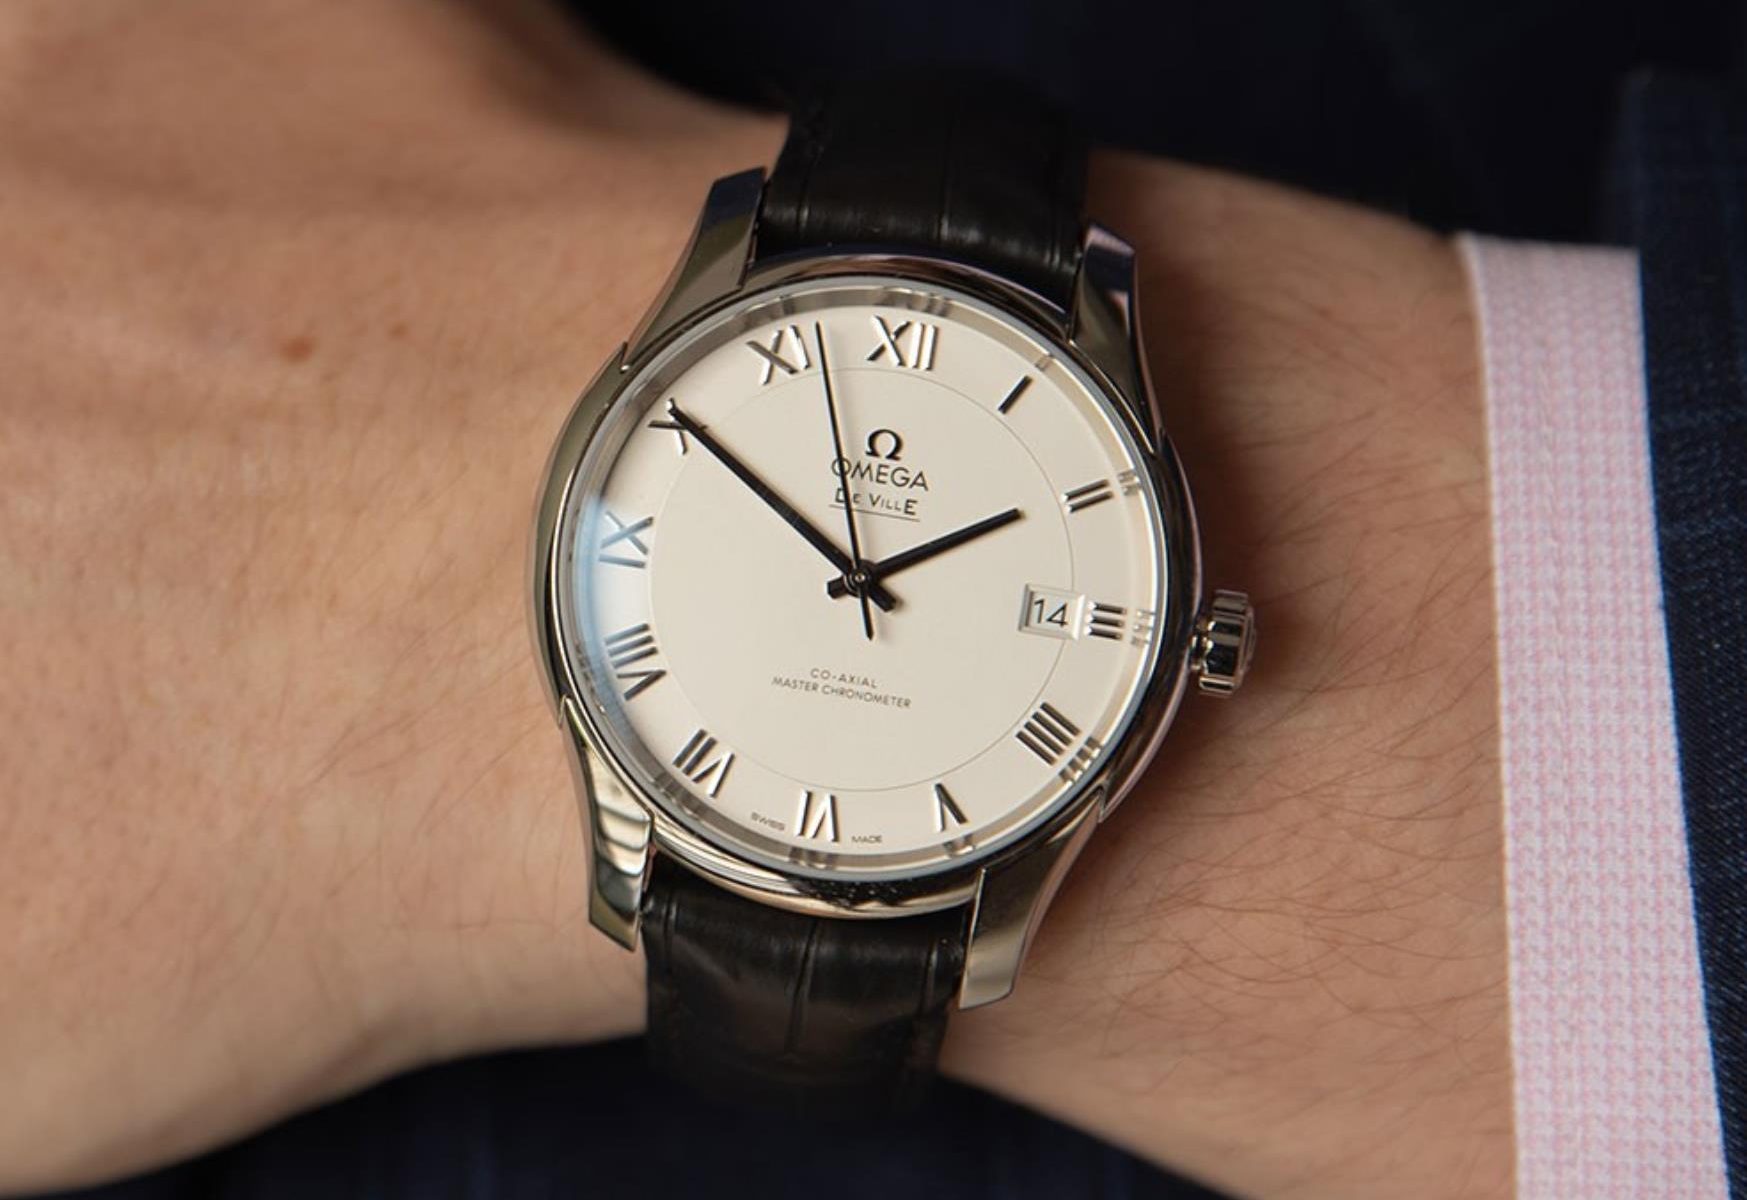 The white dial fake watch has black strap.